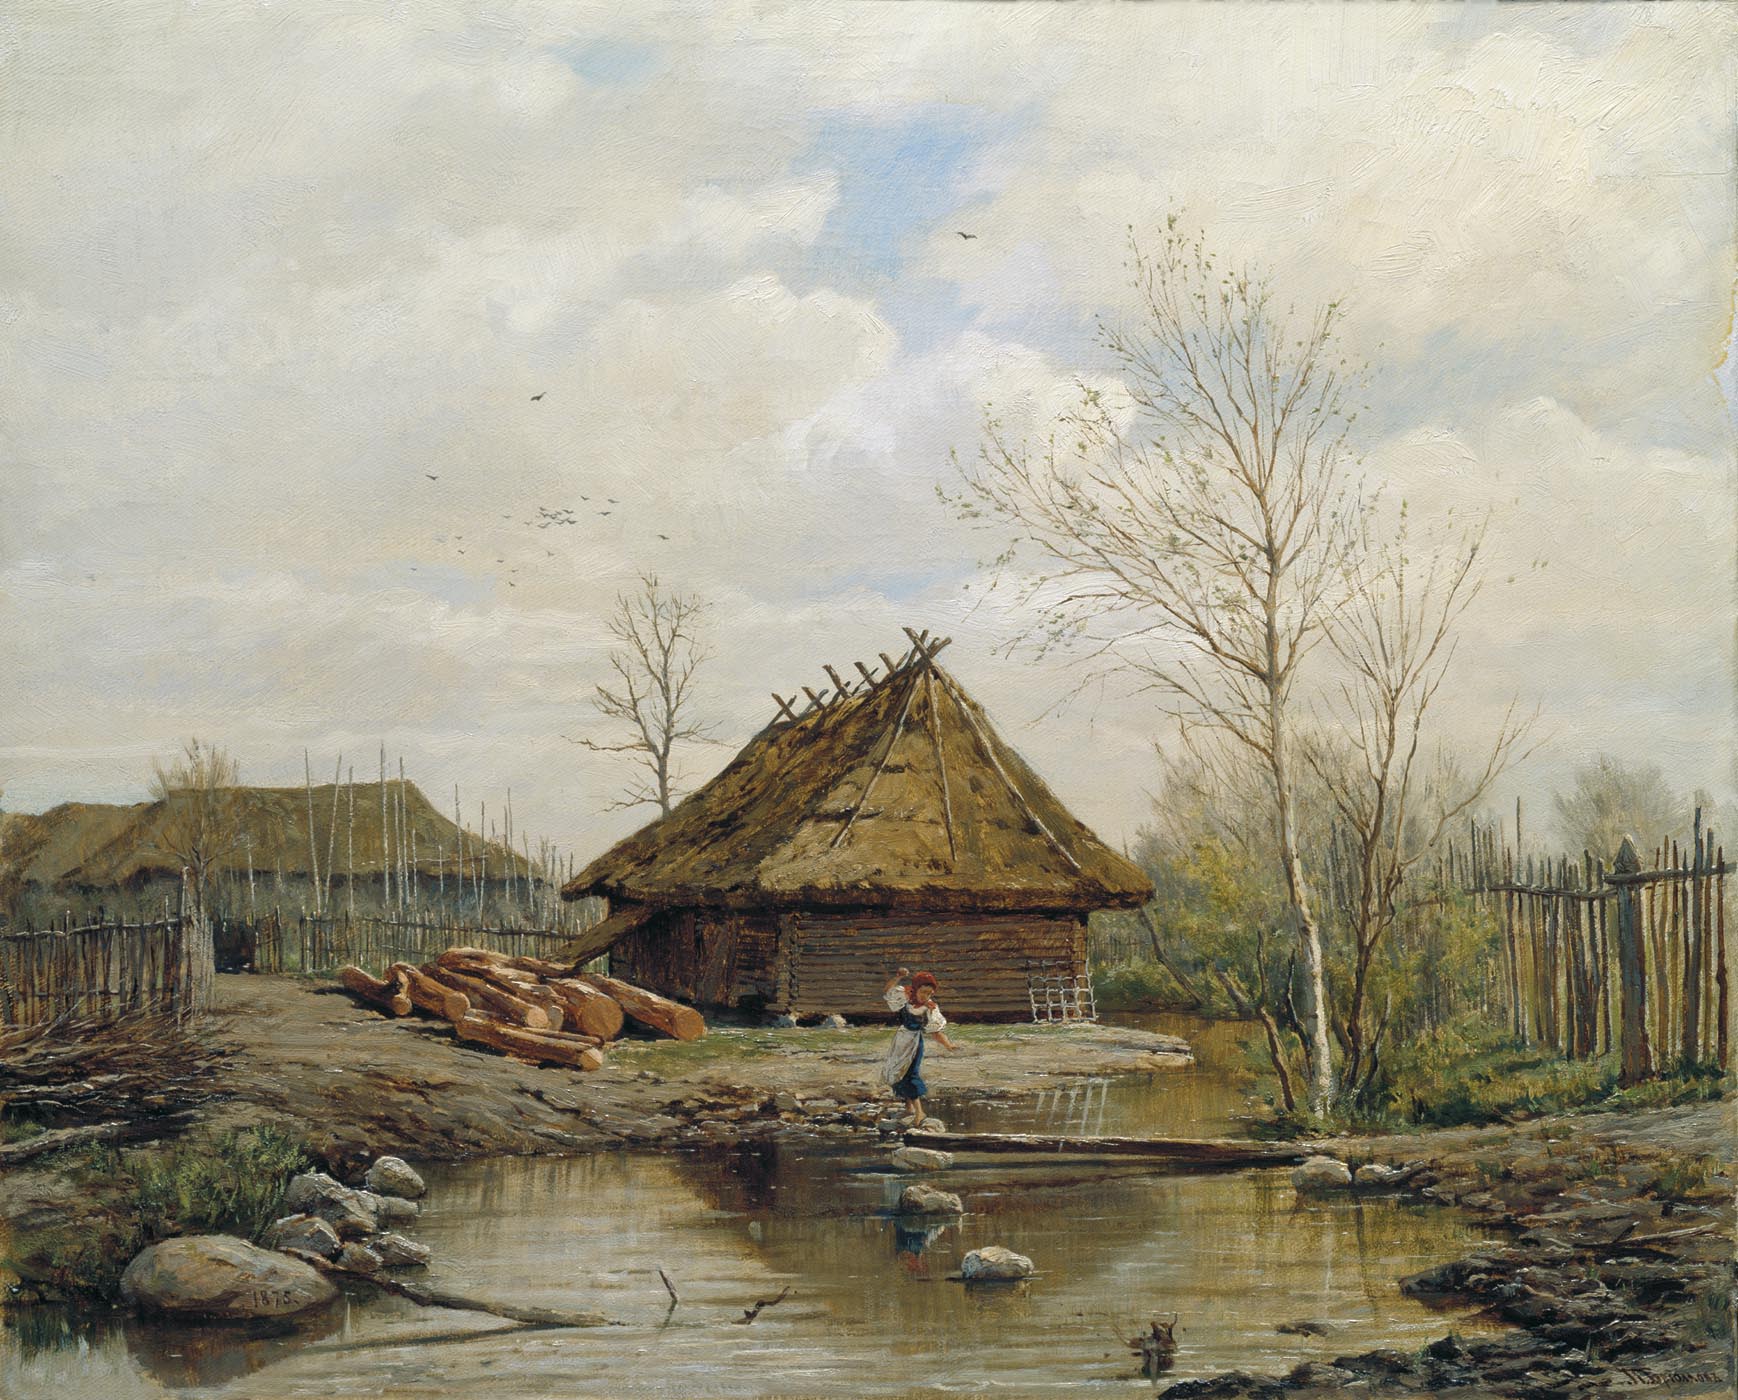 Павел Брюллов. "Весна". 1875.